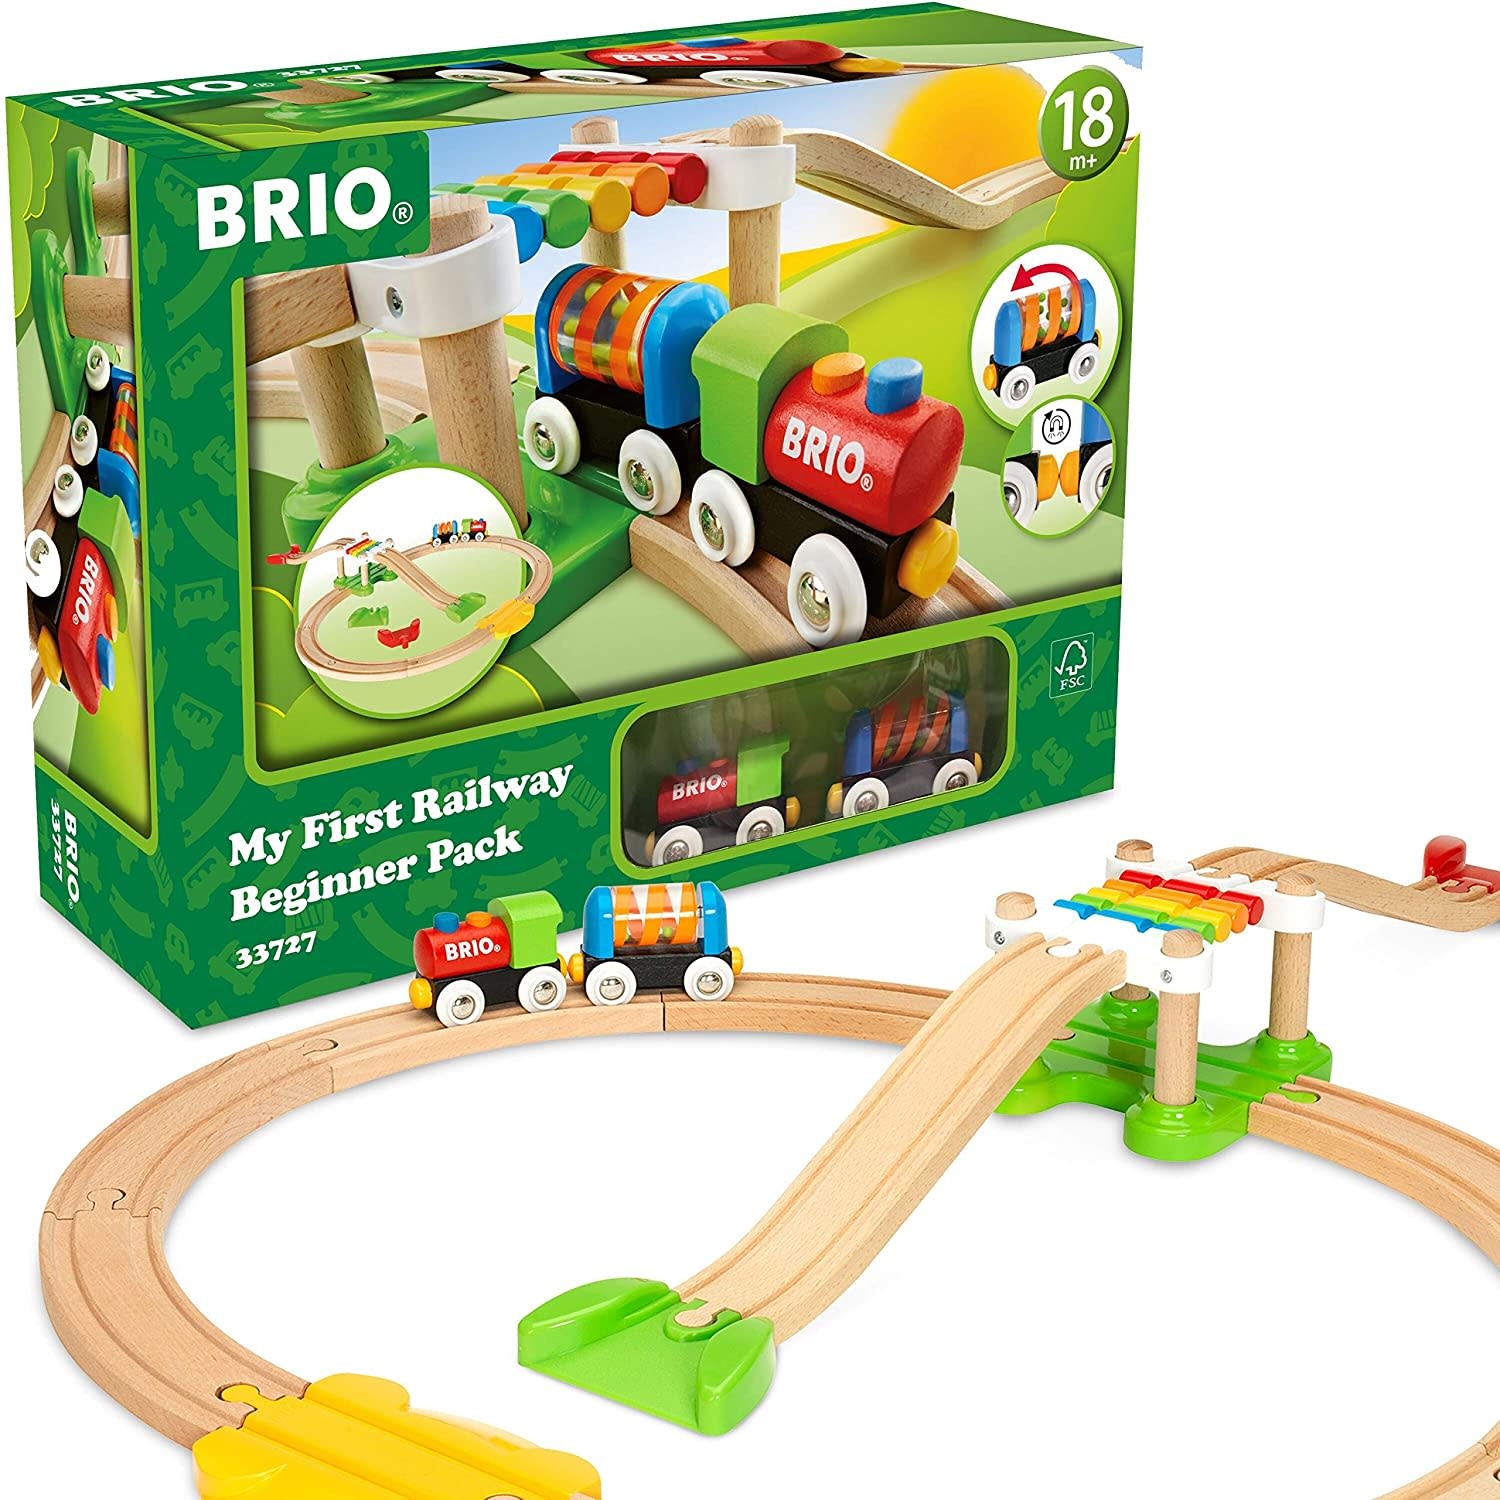 BRIO My First Railway - Beginners Pack